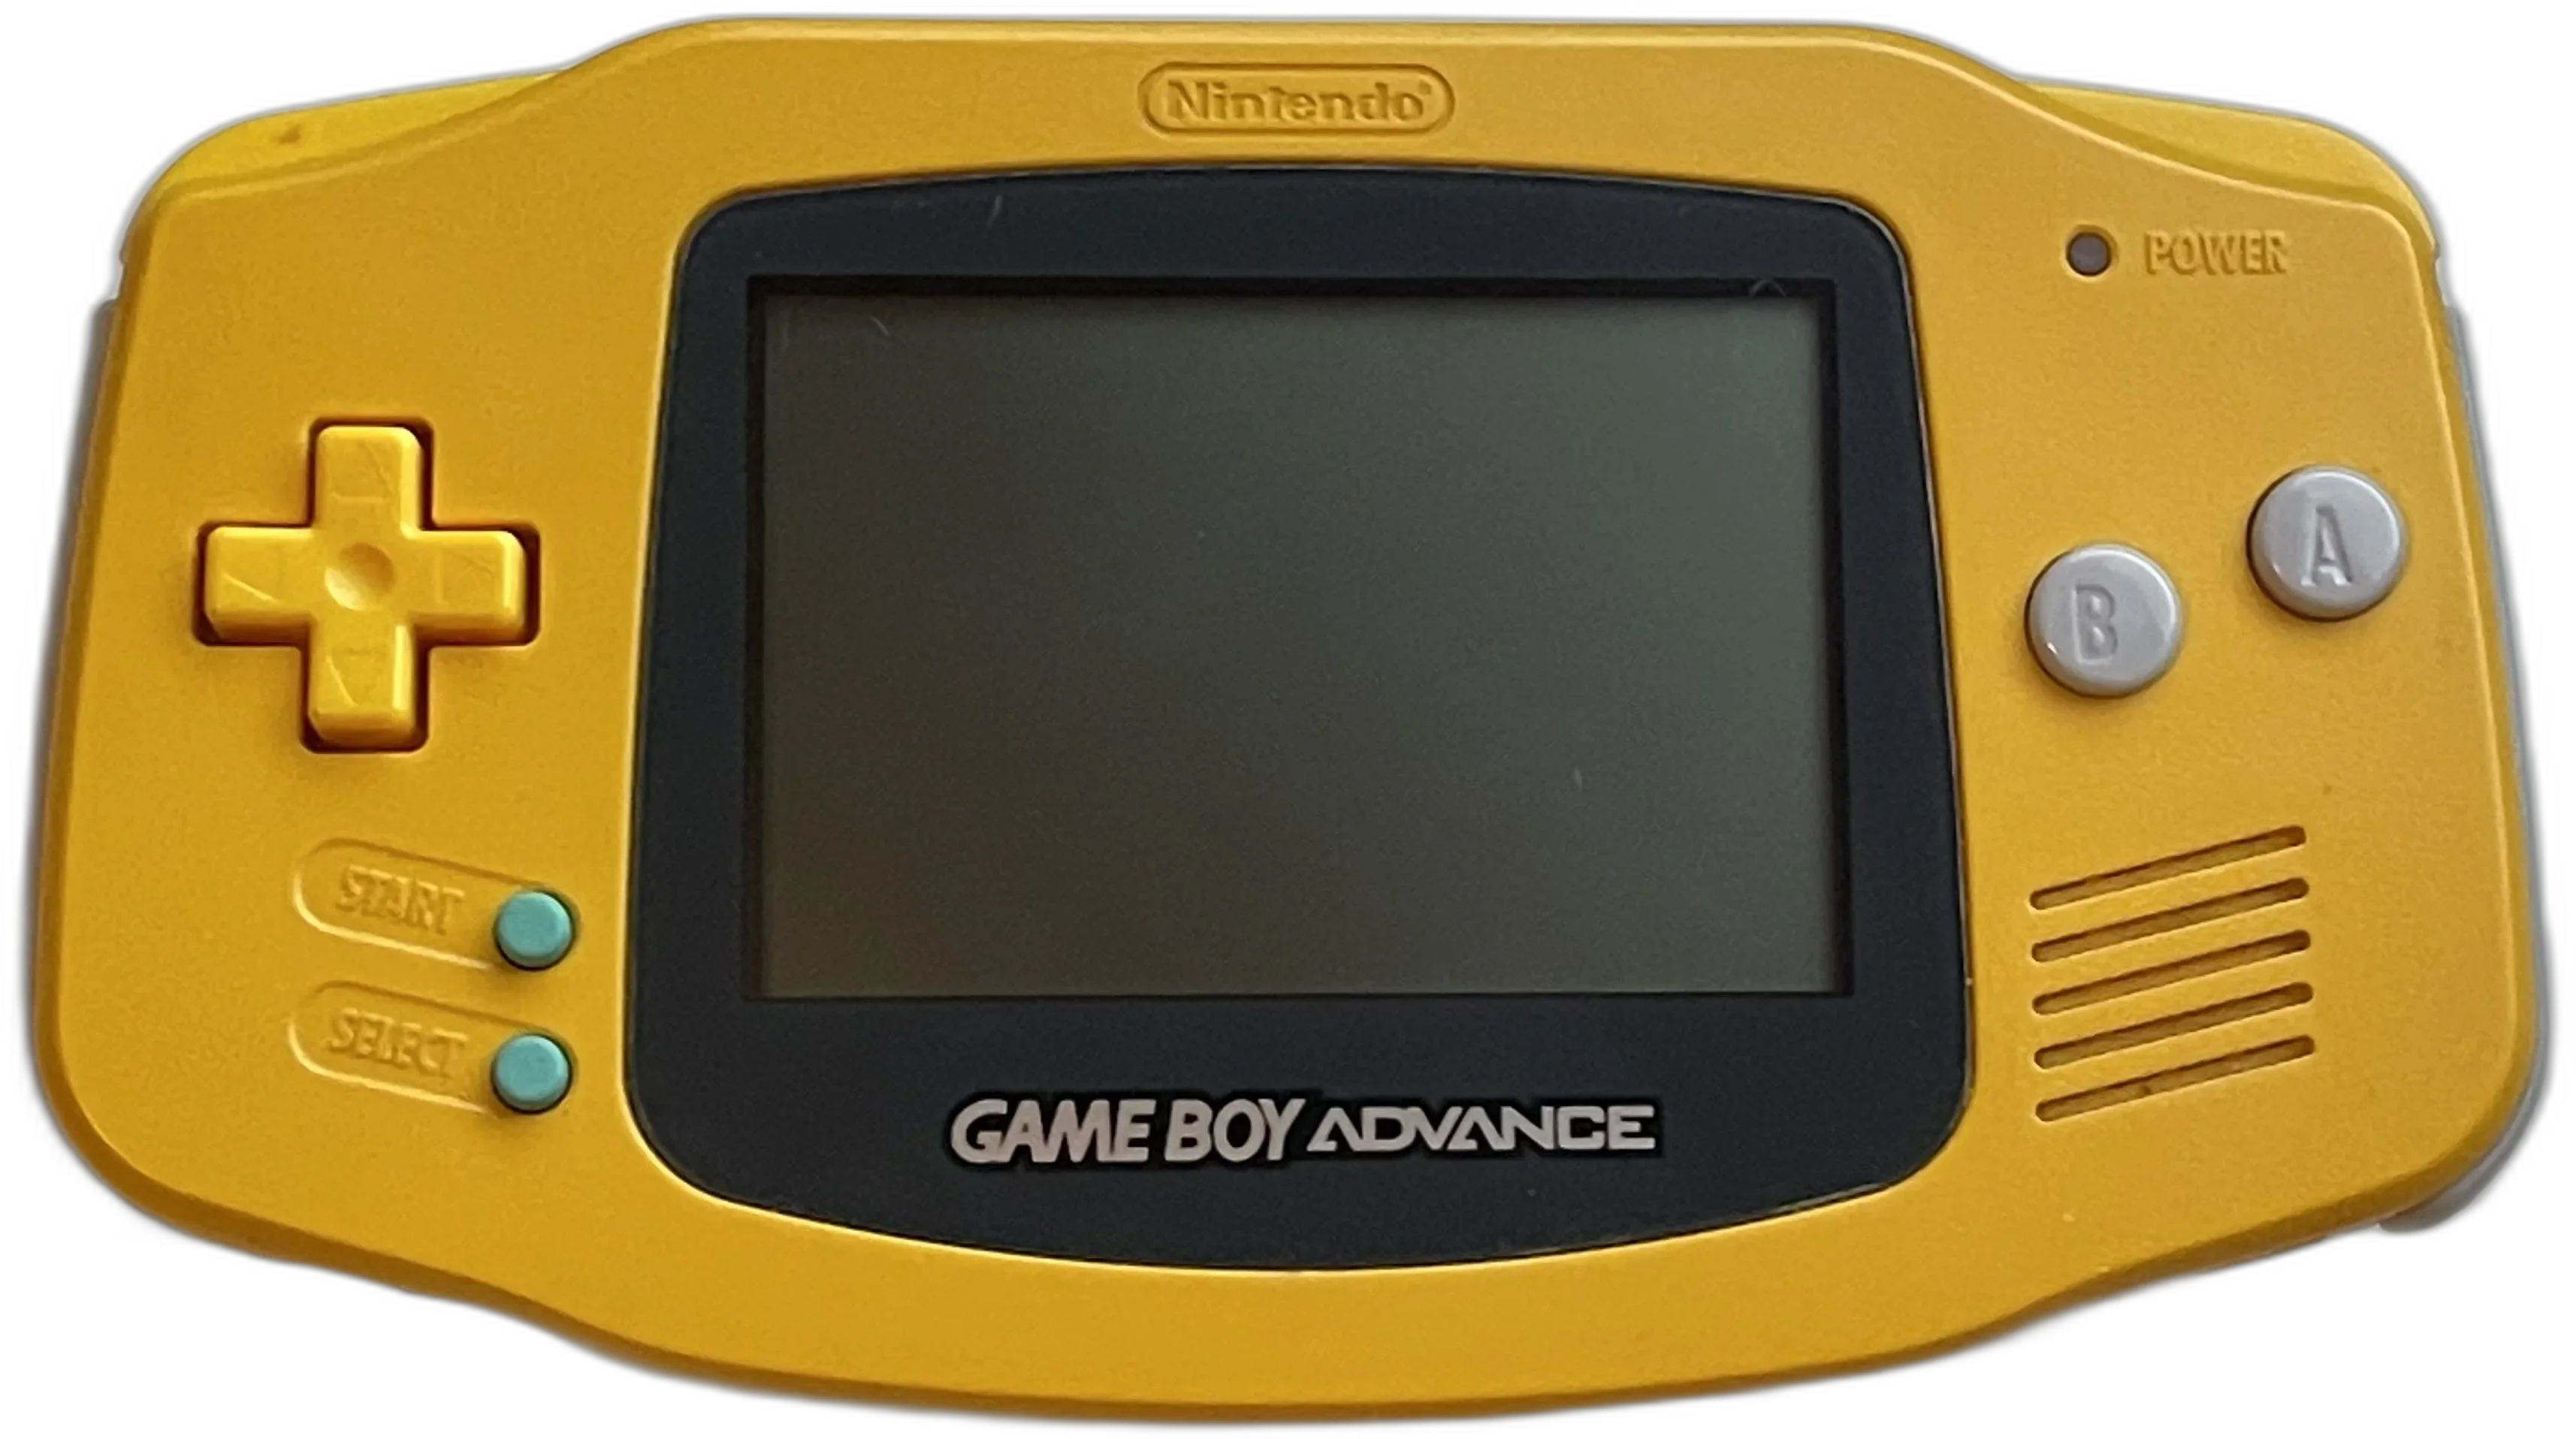  Nintendo GameBoy Advance Orange Development Kit